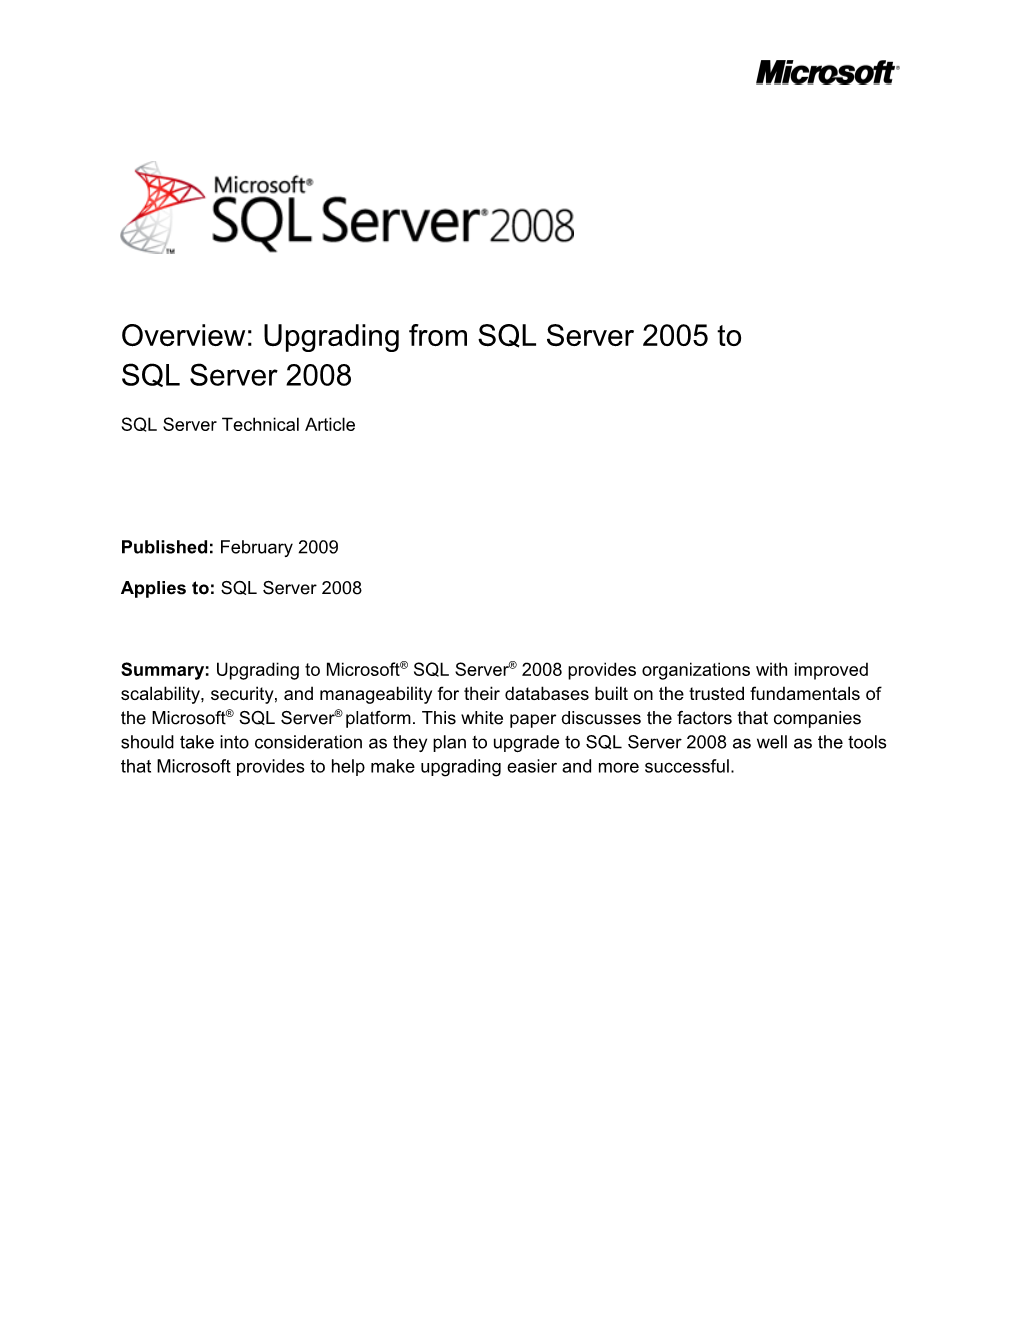 Overview: Upgrading from SQL Server 2005 to SQL Server 2008